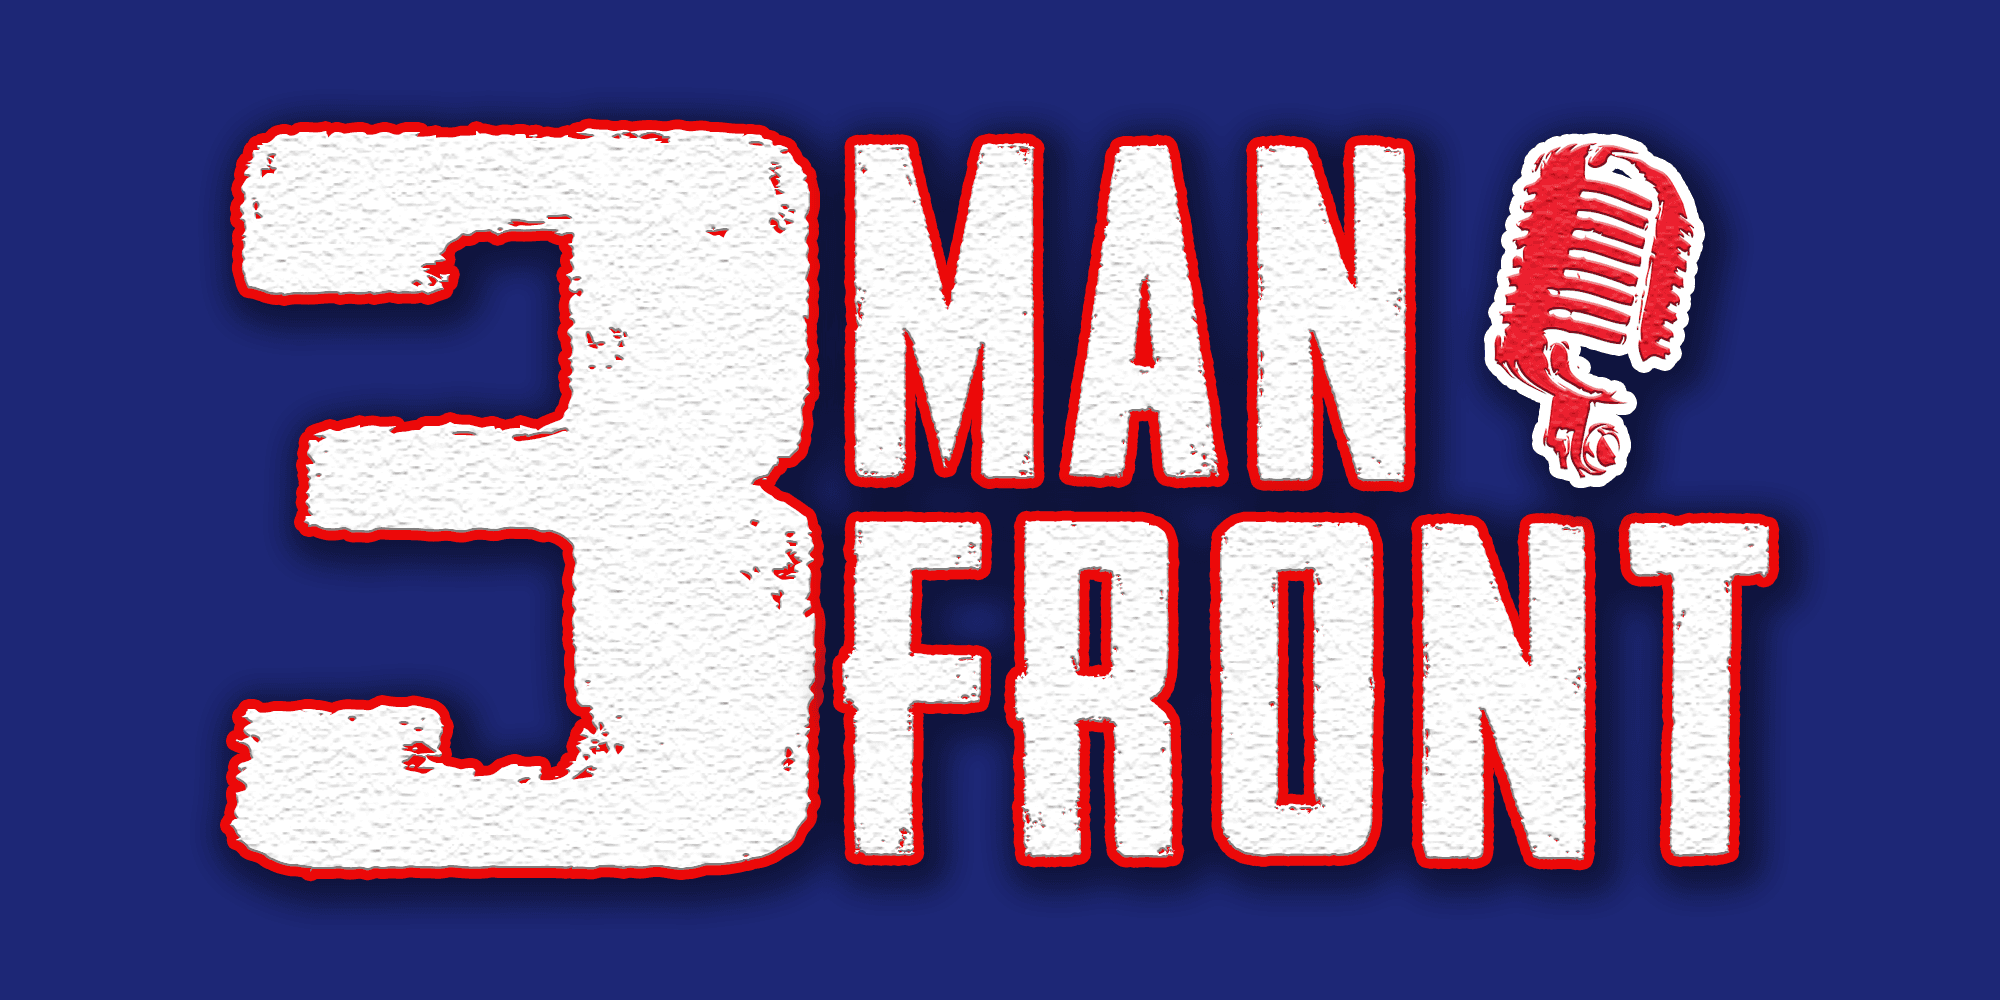 3 Man Front Main Logo 2kx1k